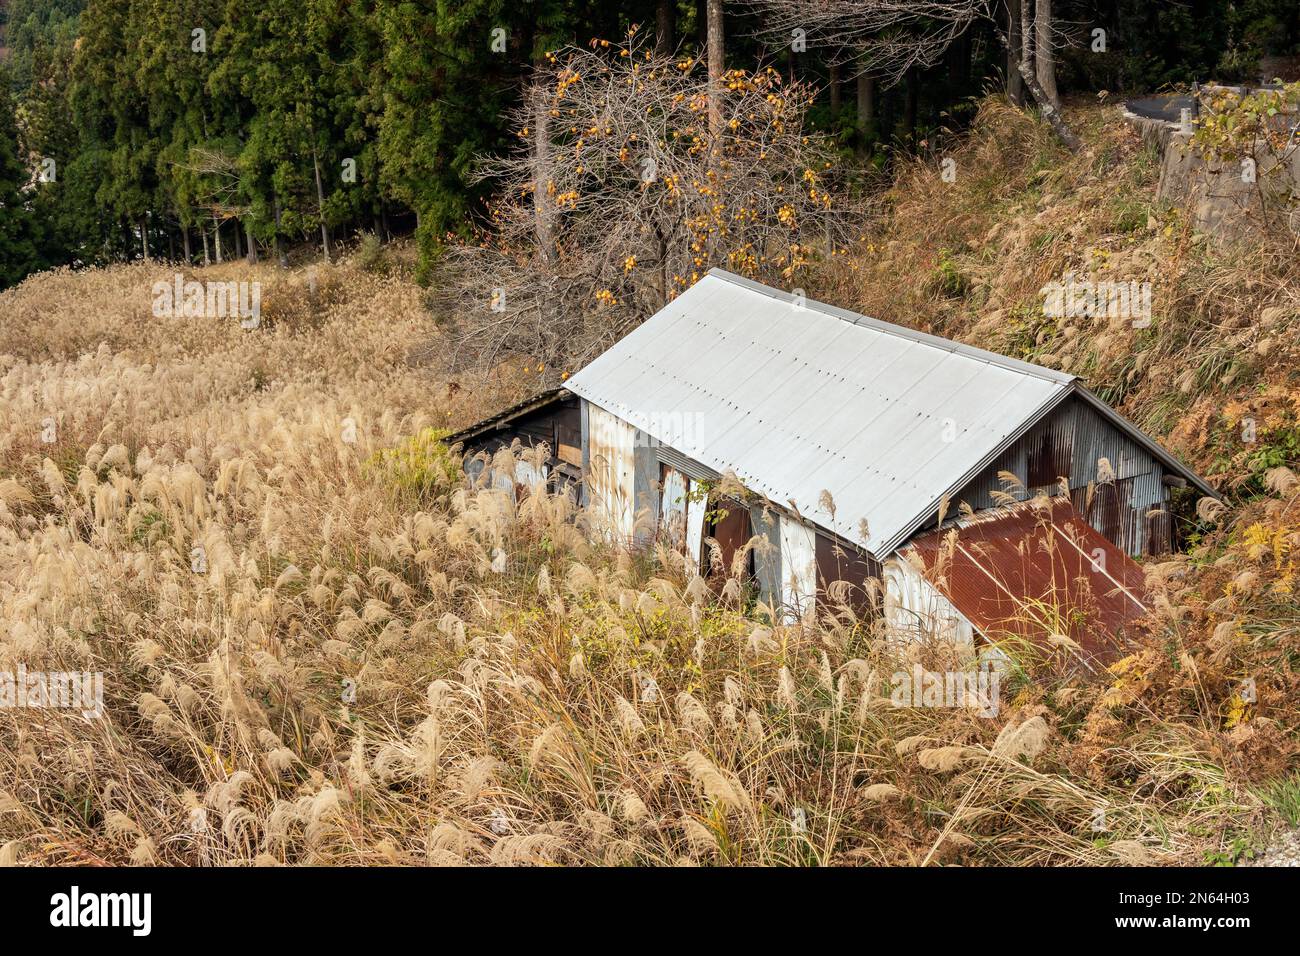 Ancien hangar avec persimmon et silvergrass, près de Nagaro, Iya Valley, Japon Banque D'Images